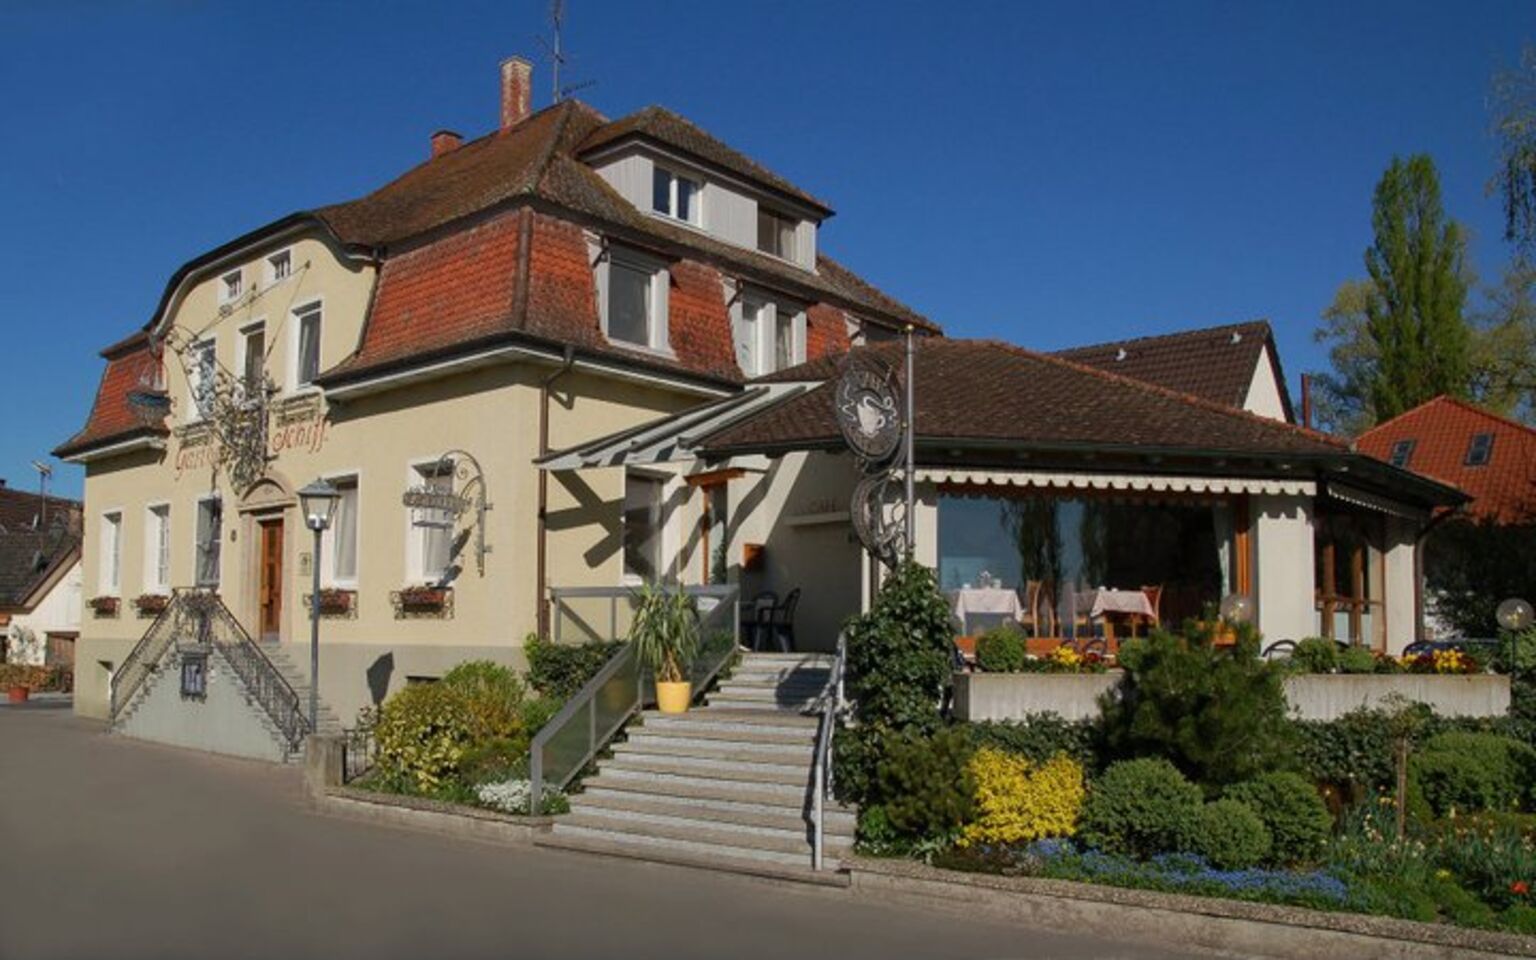 A photo of Gasthaus Schiff